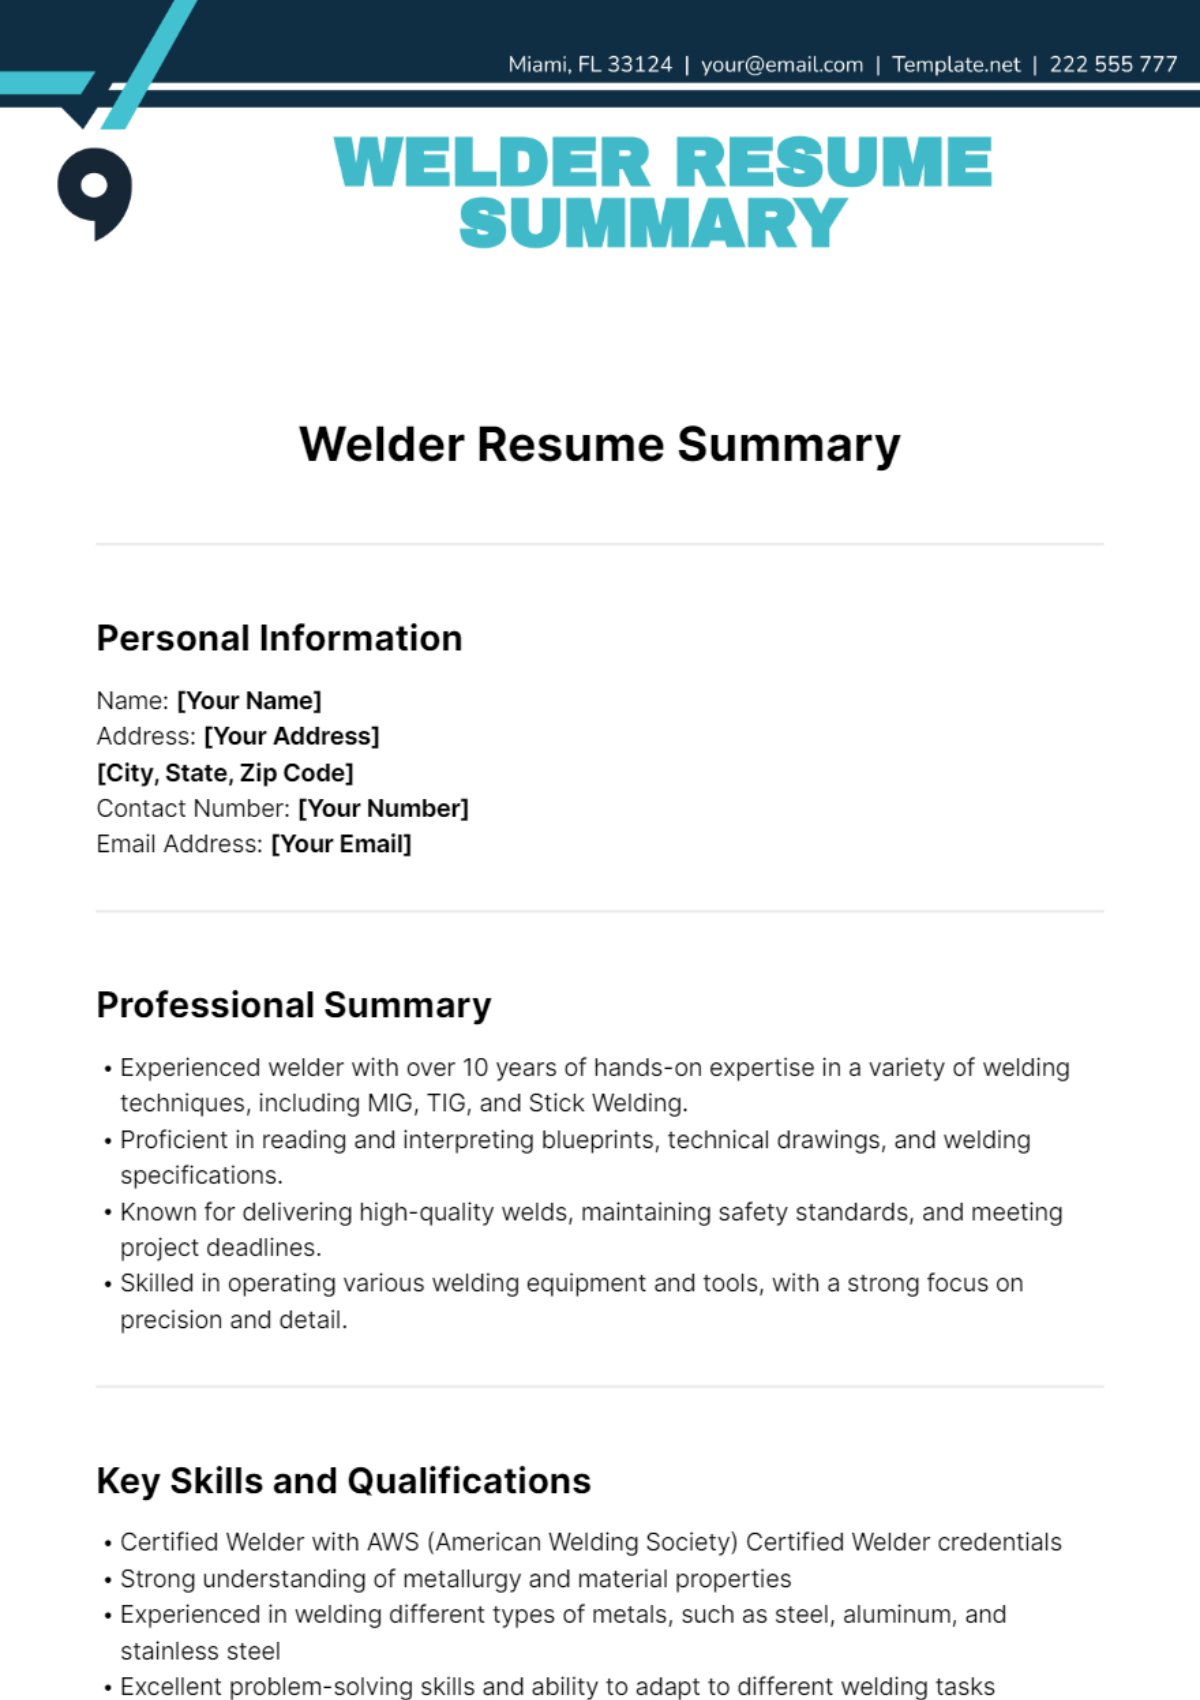 Welder Resume Summary Template